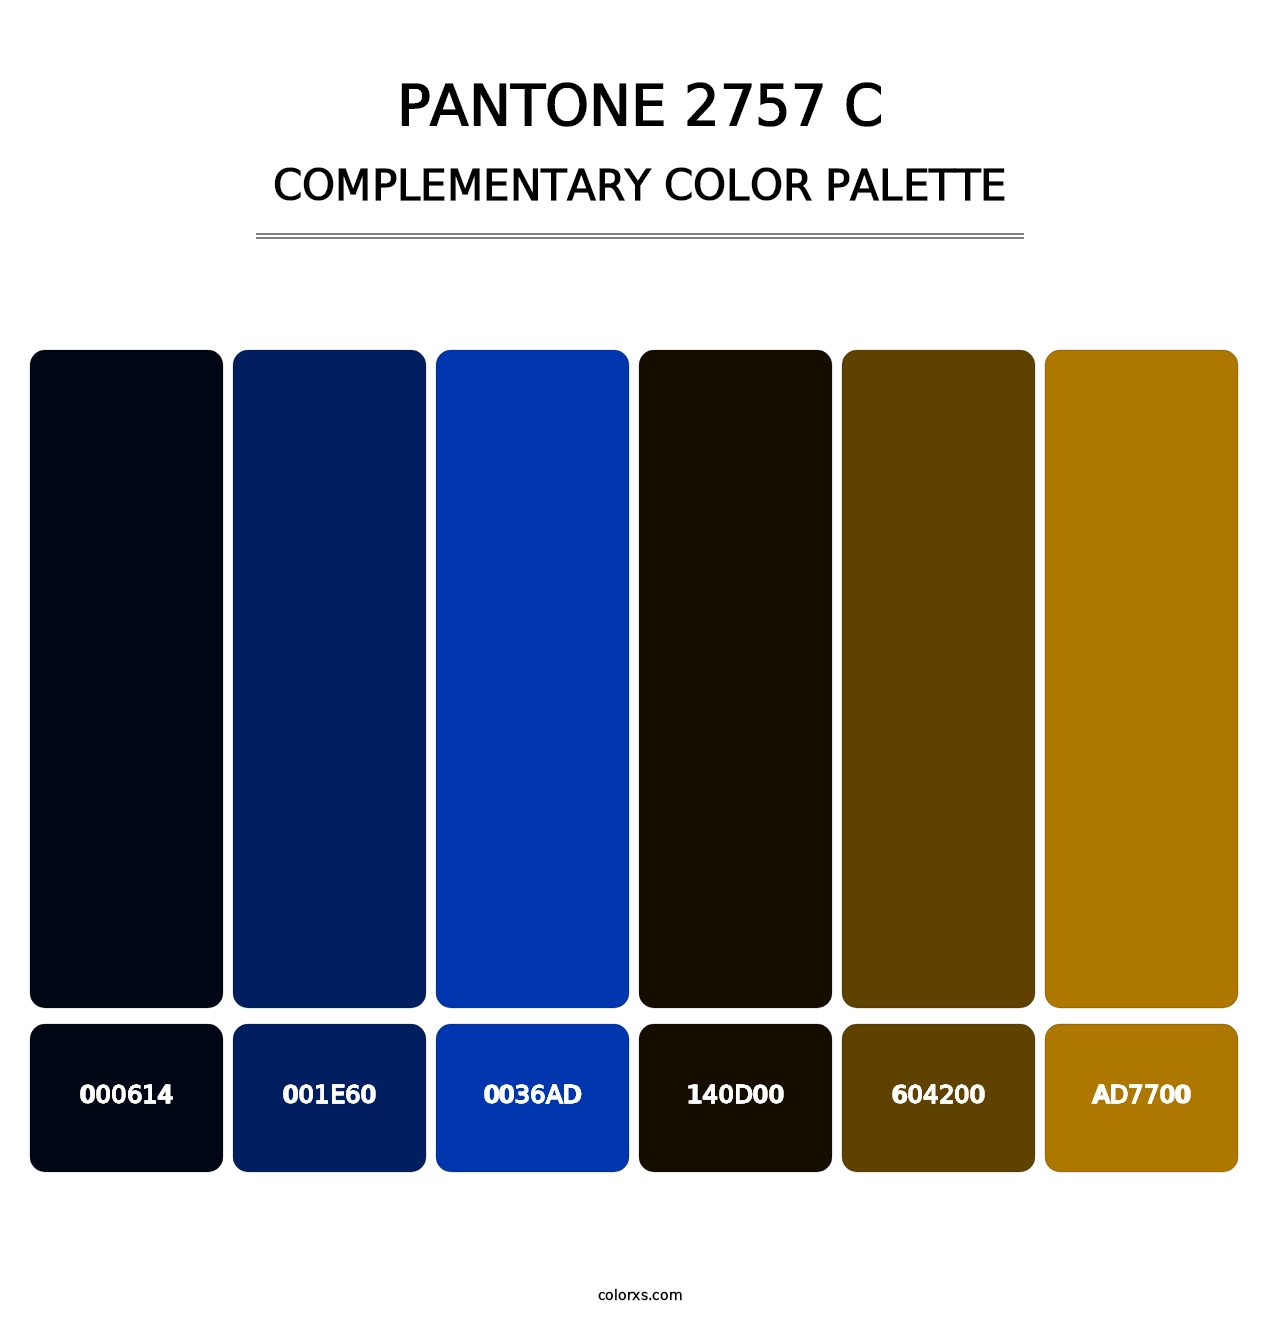 PANTONE 2757 C - Complementary Color Palette